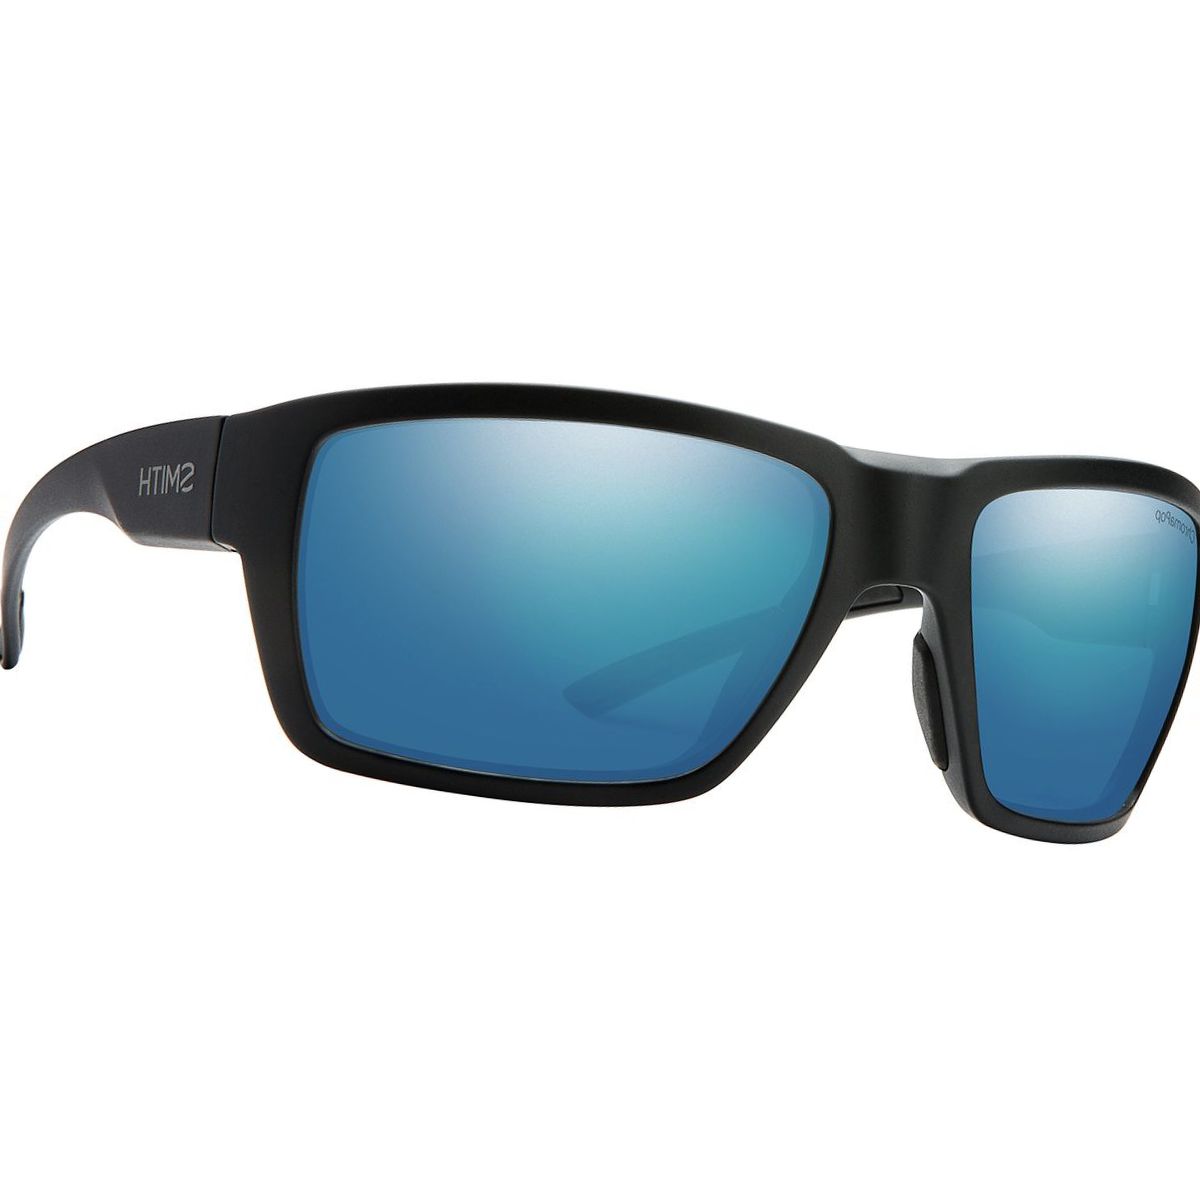 Smith Highwater ChromaPop+ Polarized Sunglasses - Men's